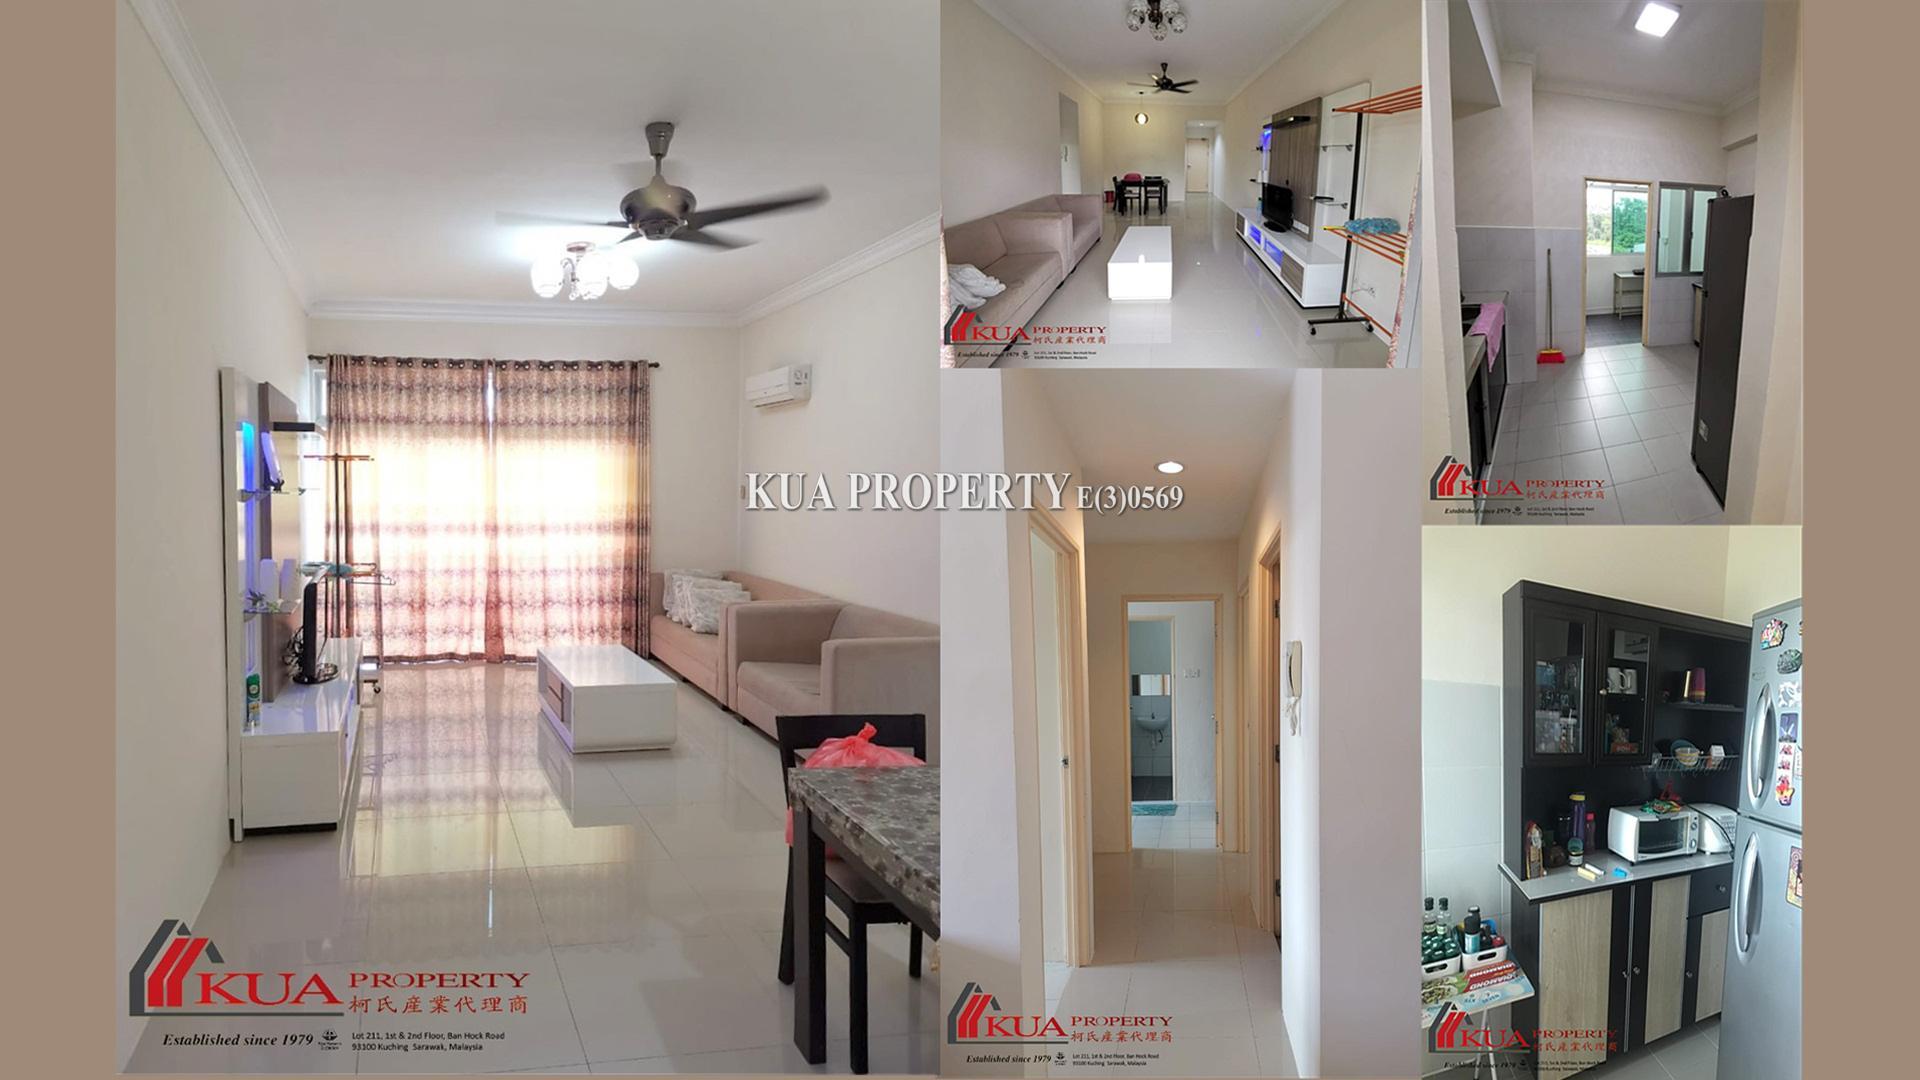 Skyvilla Apartment (Corner Unit) For Rent! at MJC, Batu Kawa, Kuching